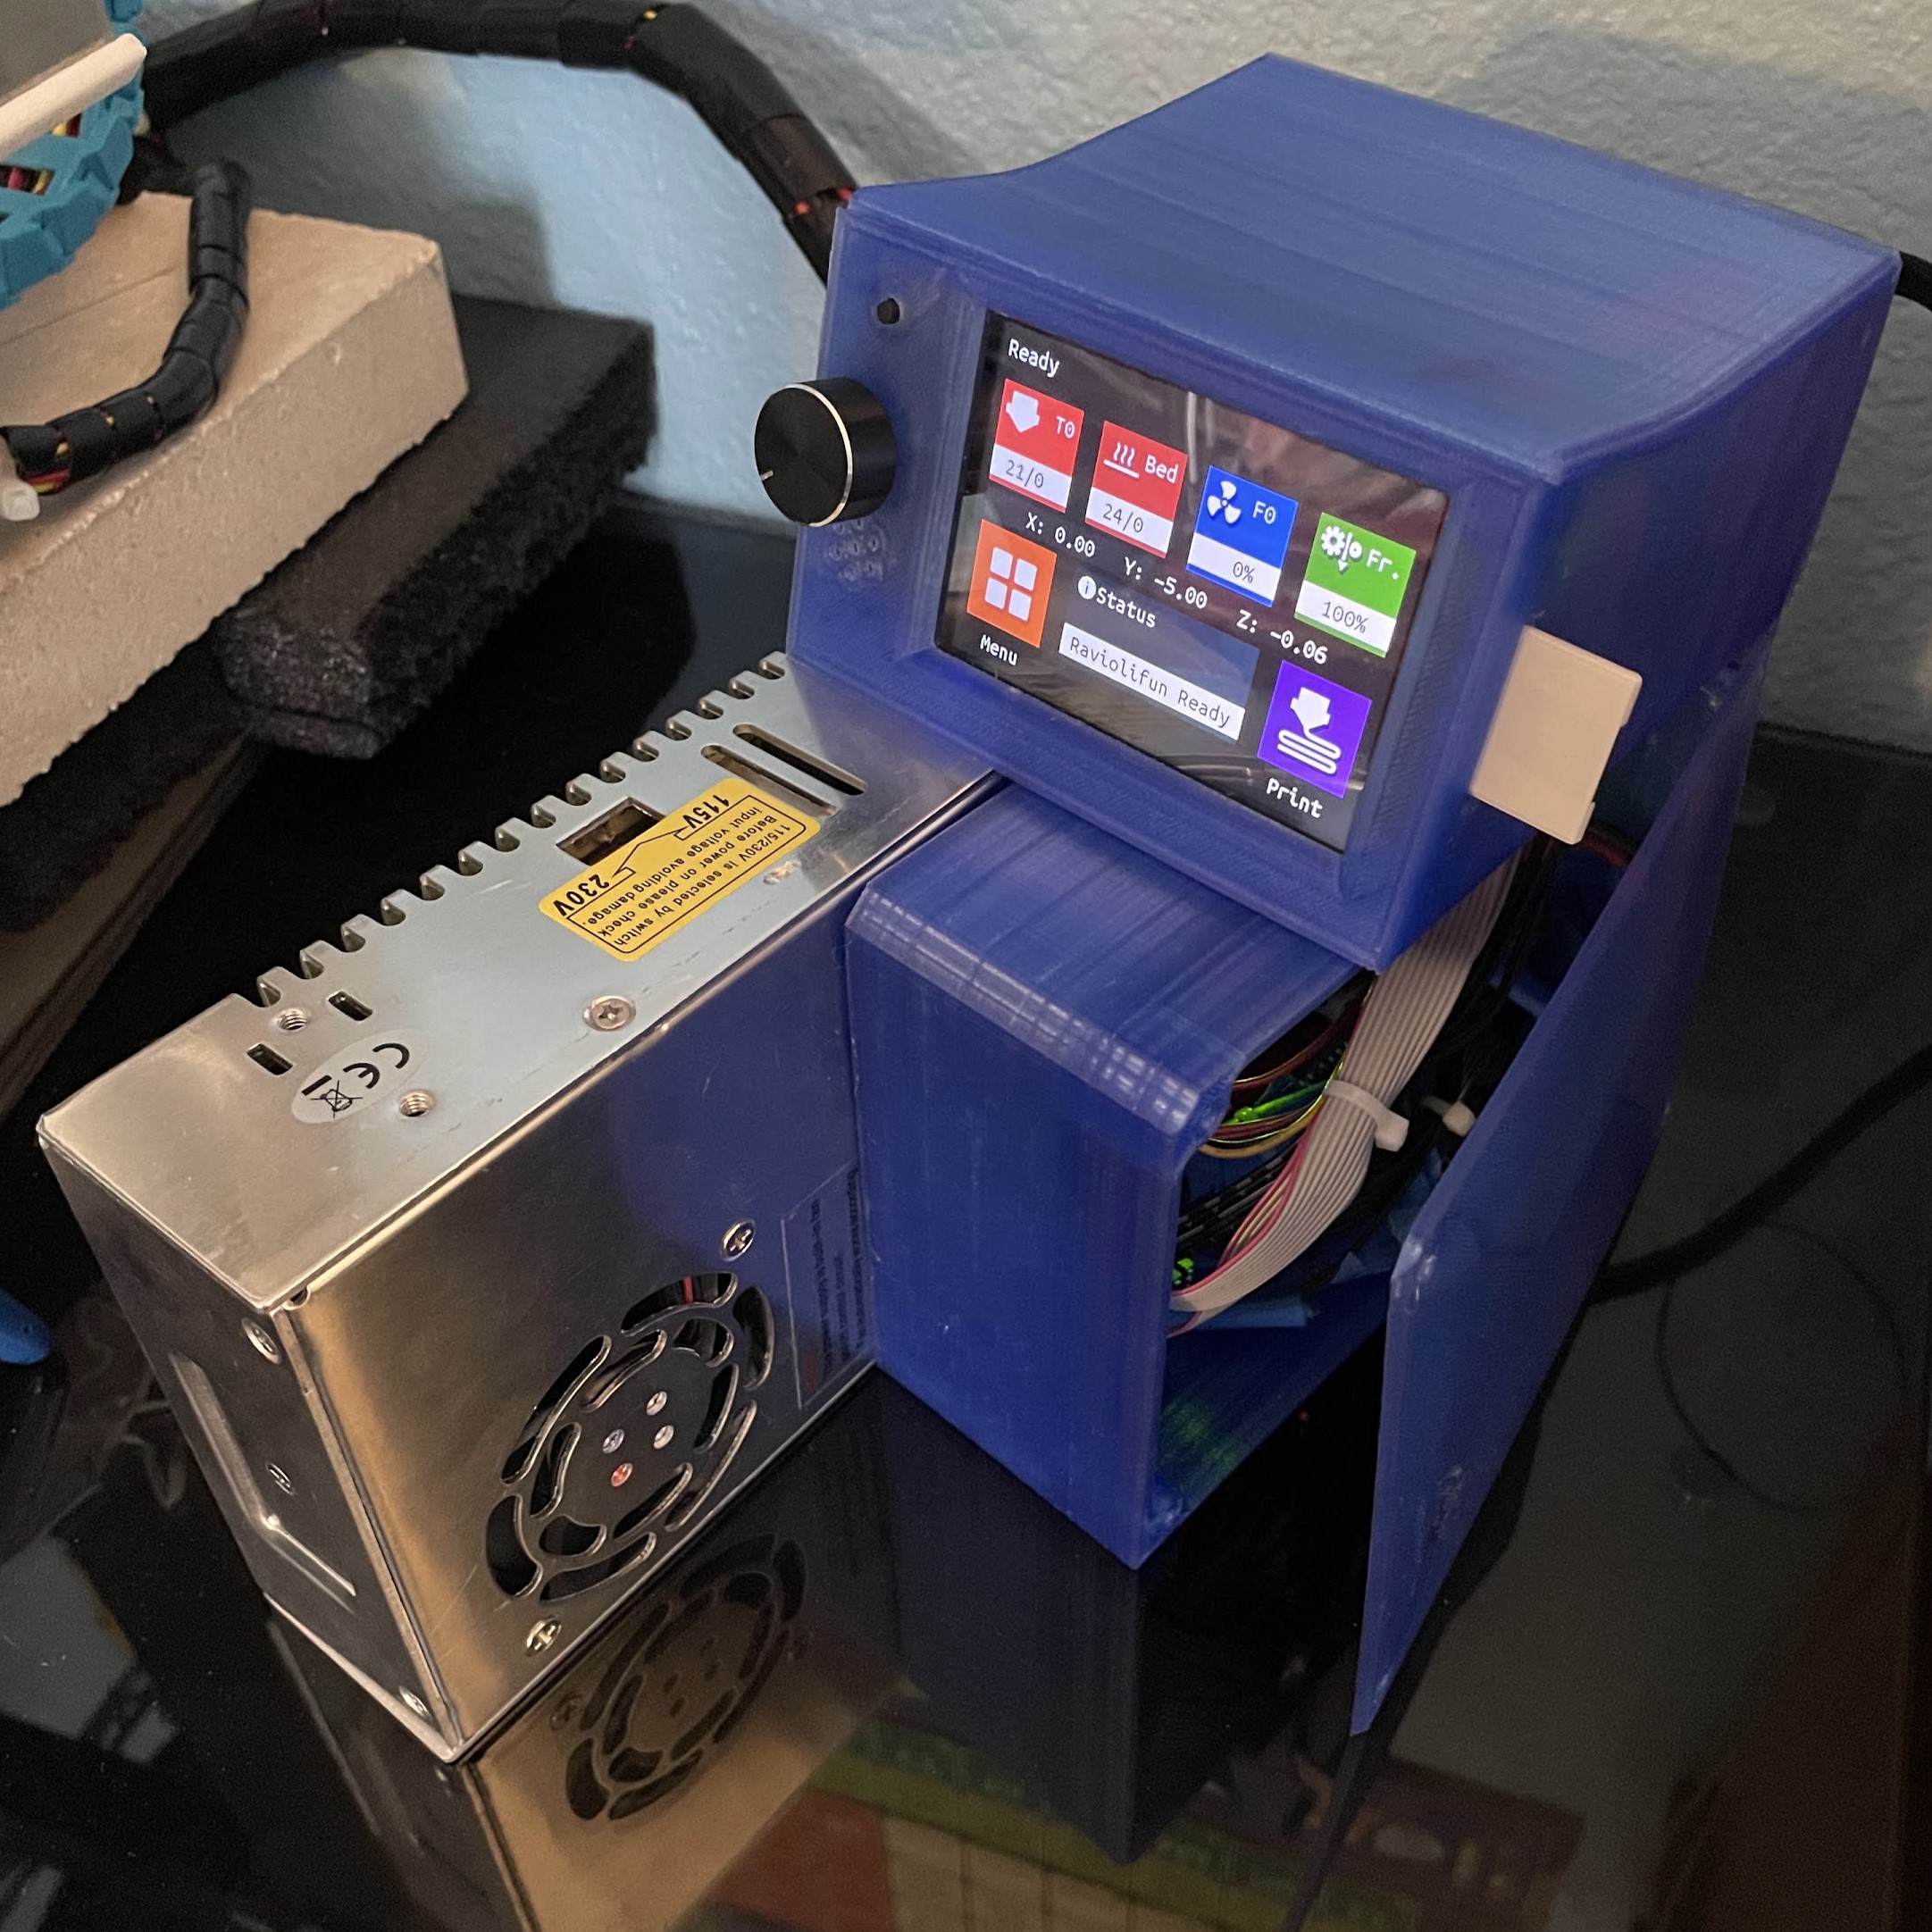 3D printer case, with lid ajar